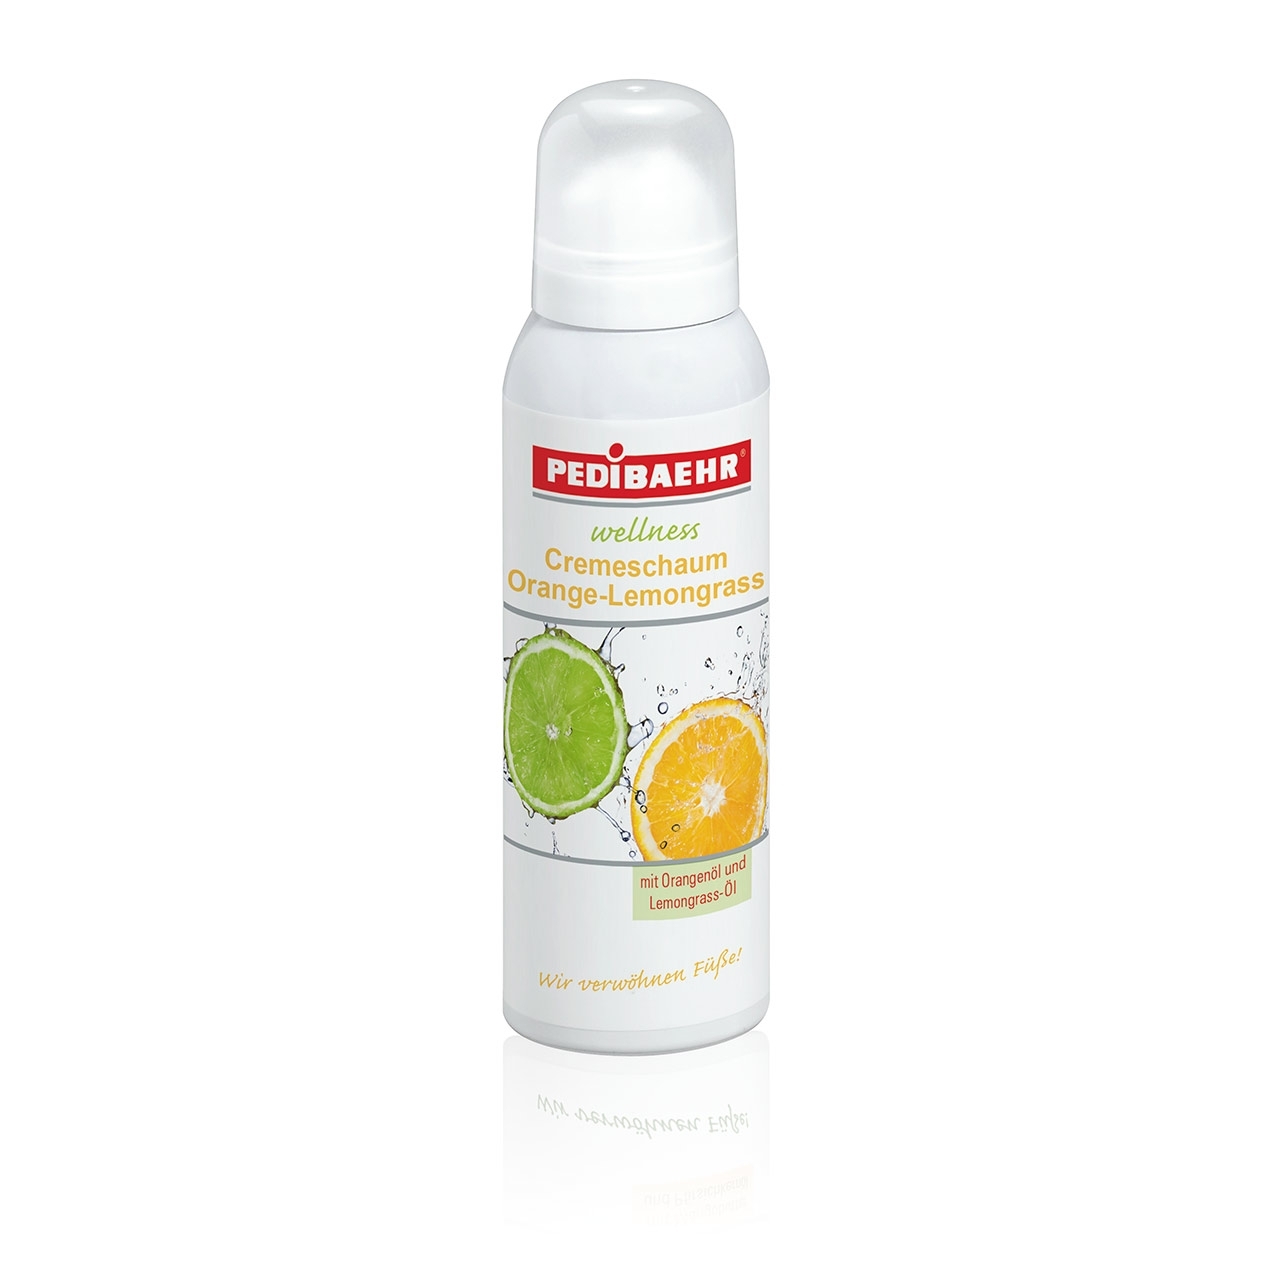 PEDIBAEHR Cremeschaum Orange-Lemongrass 125 ml